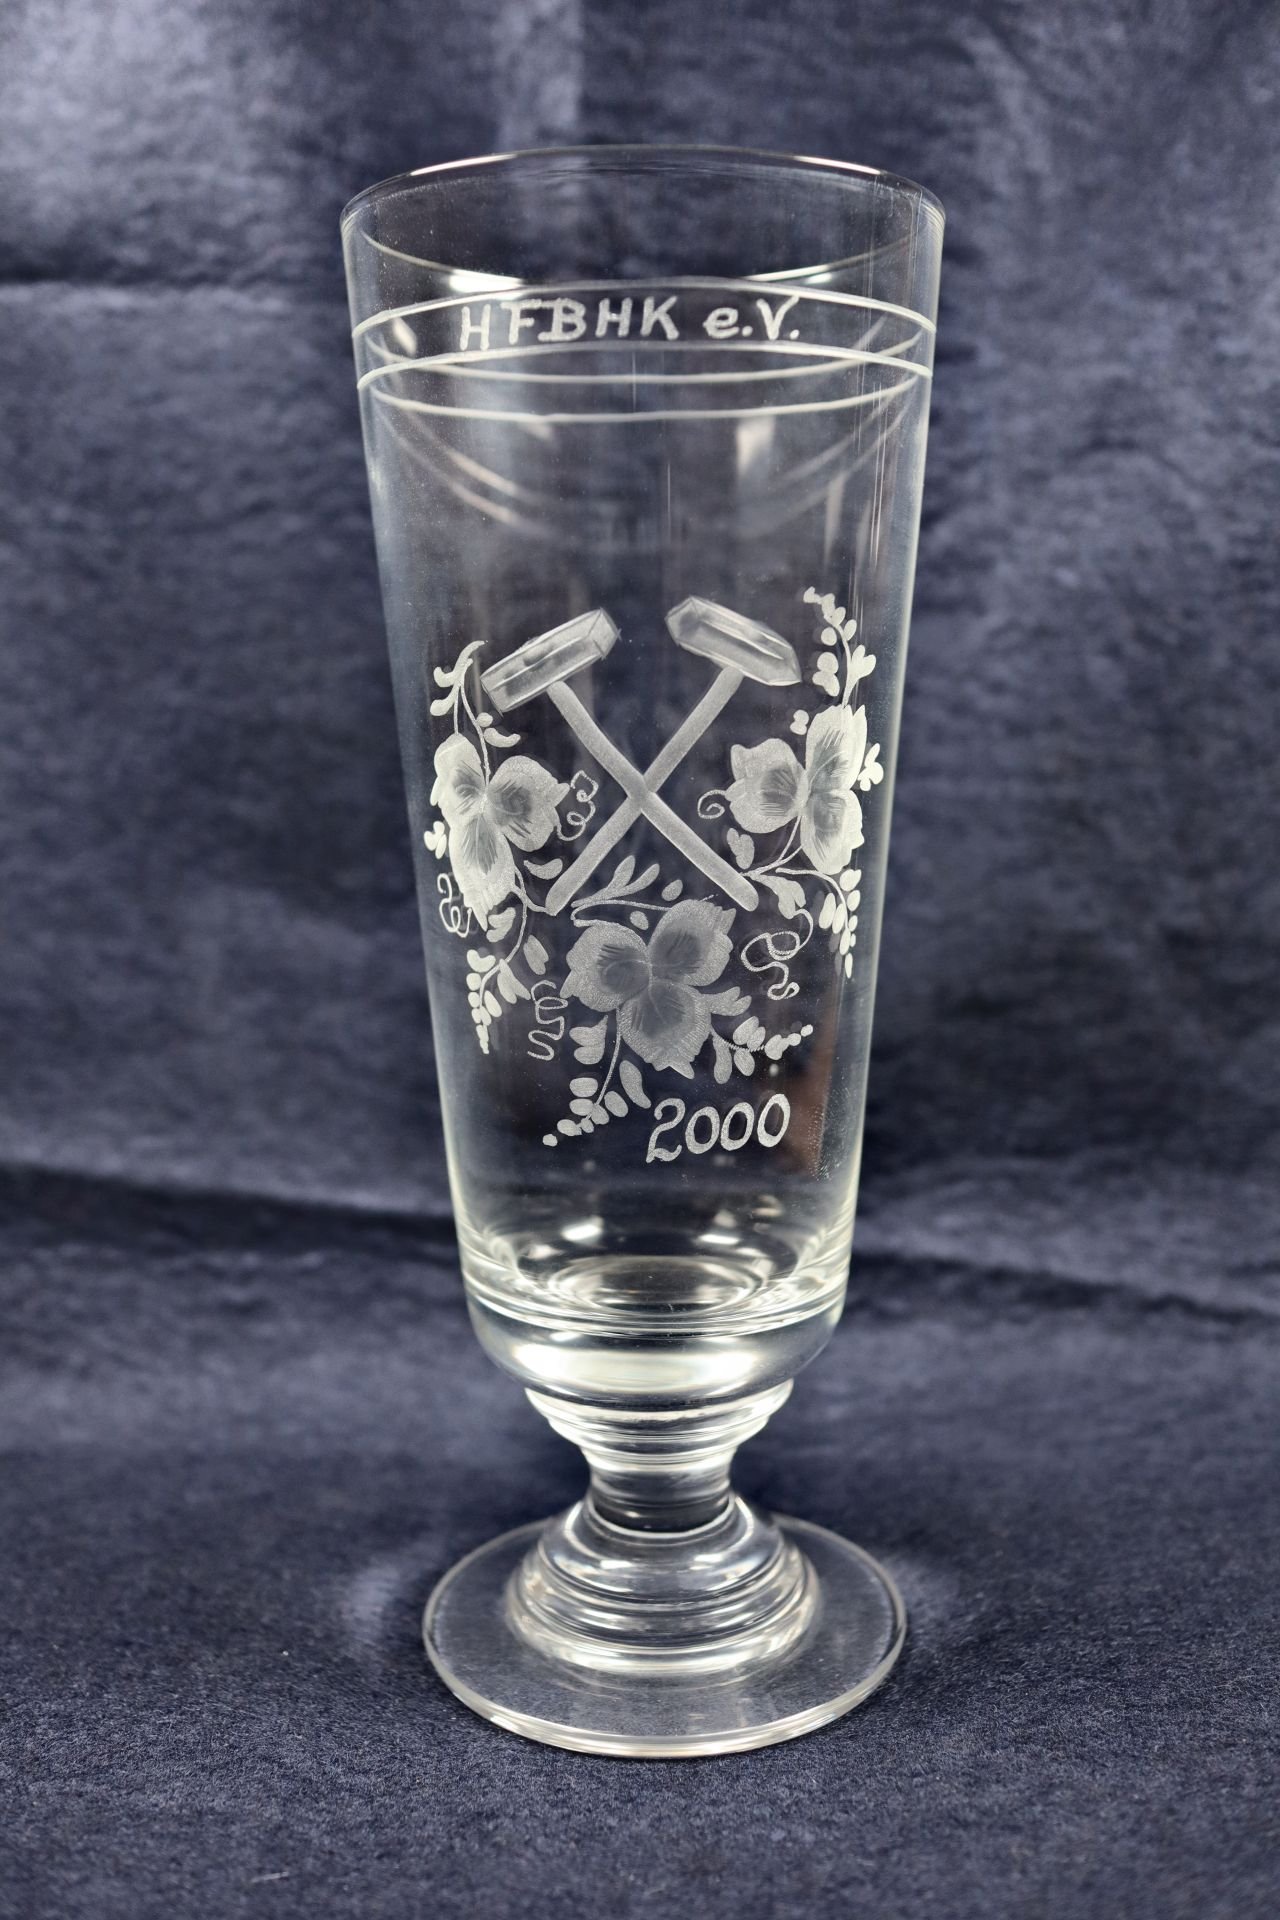 Trinkglas "HFBHK e.V. 2000" (Saxonia-Freiberg-Stiftung CC BY-NC-SA)